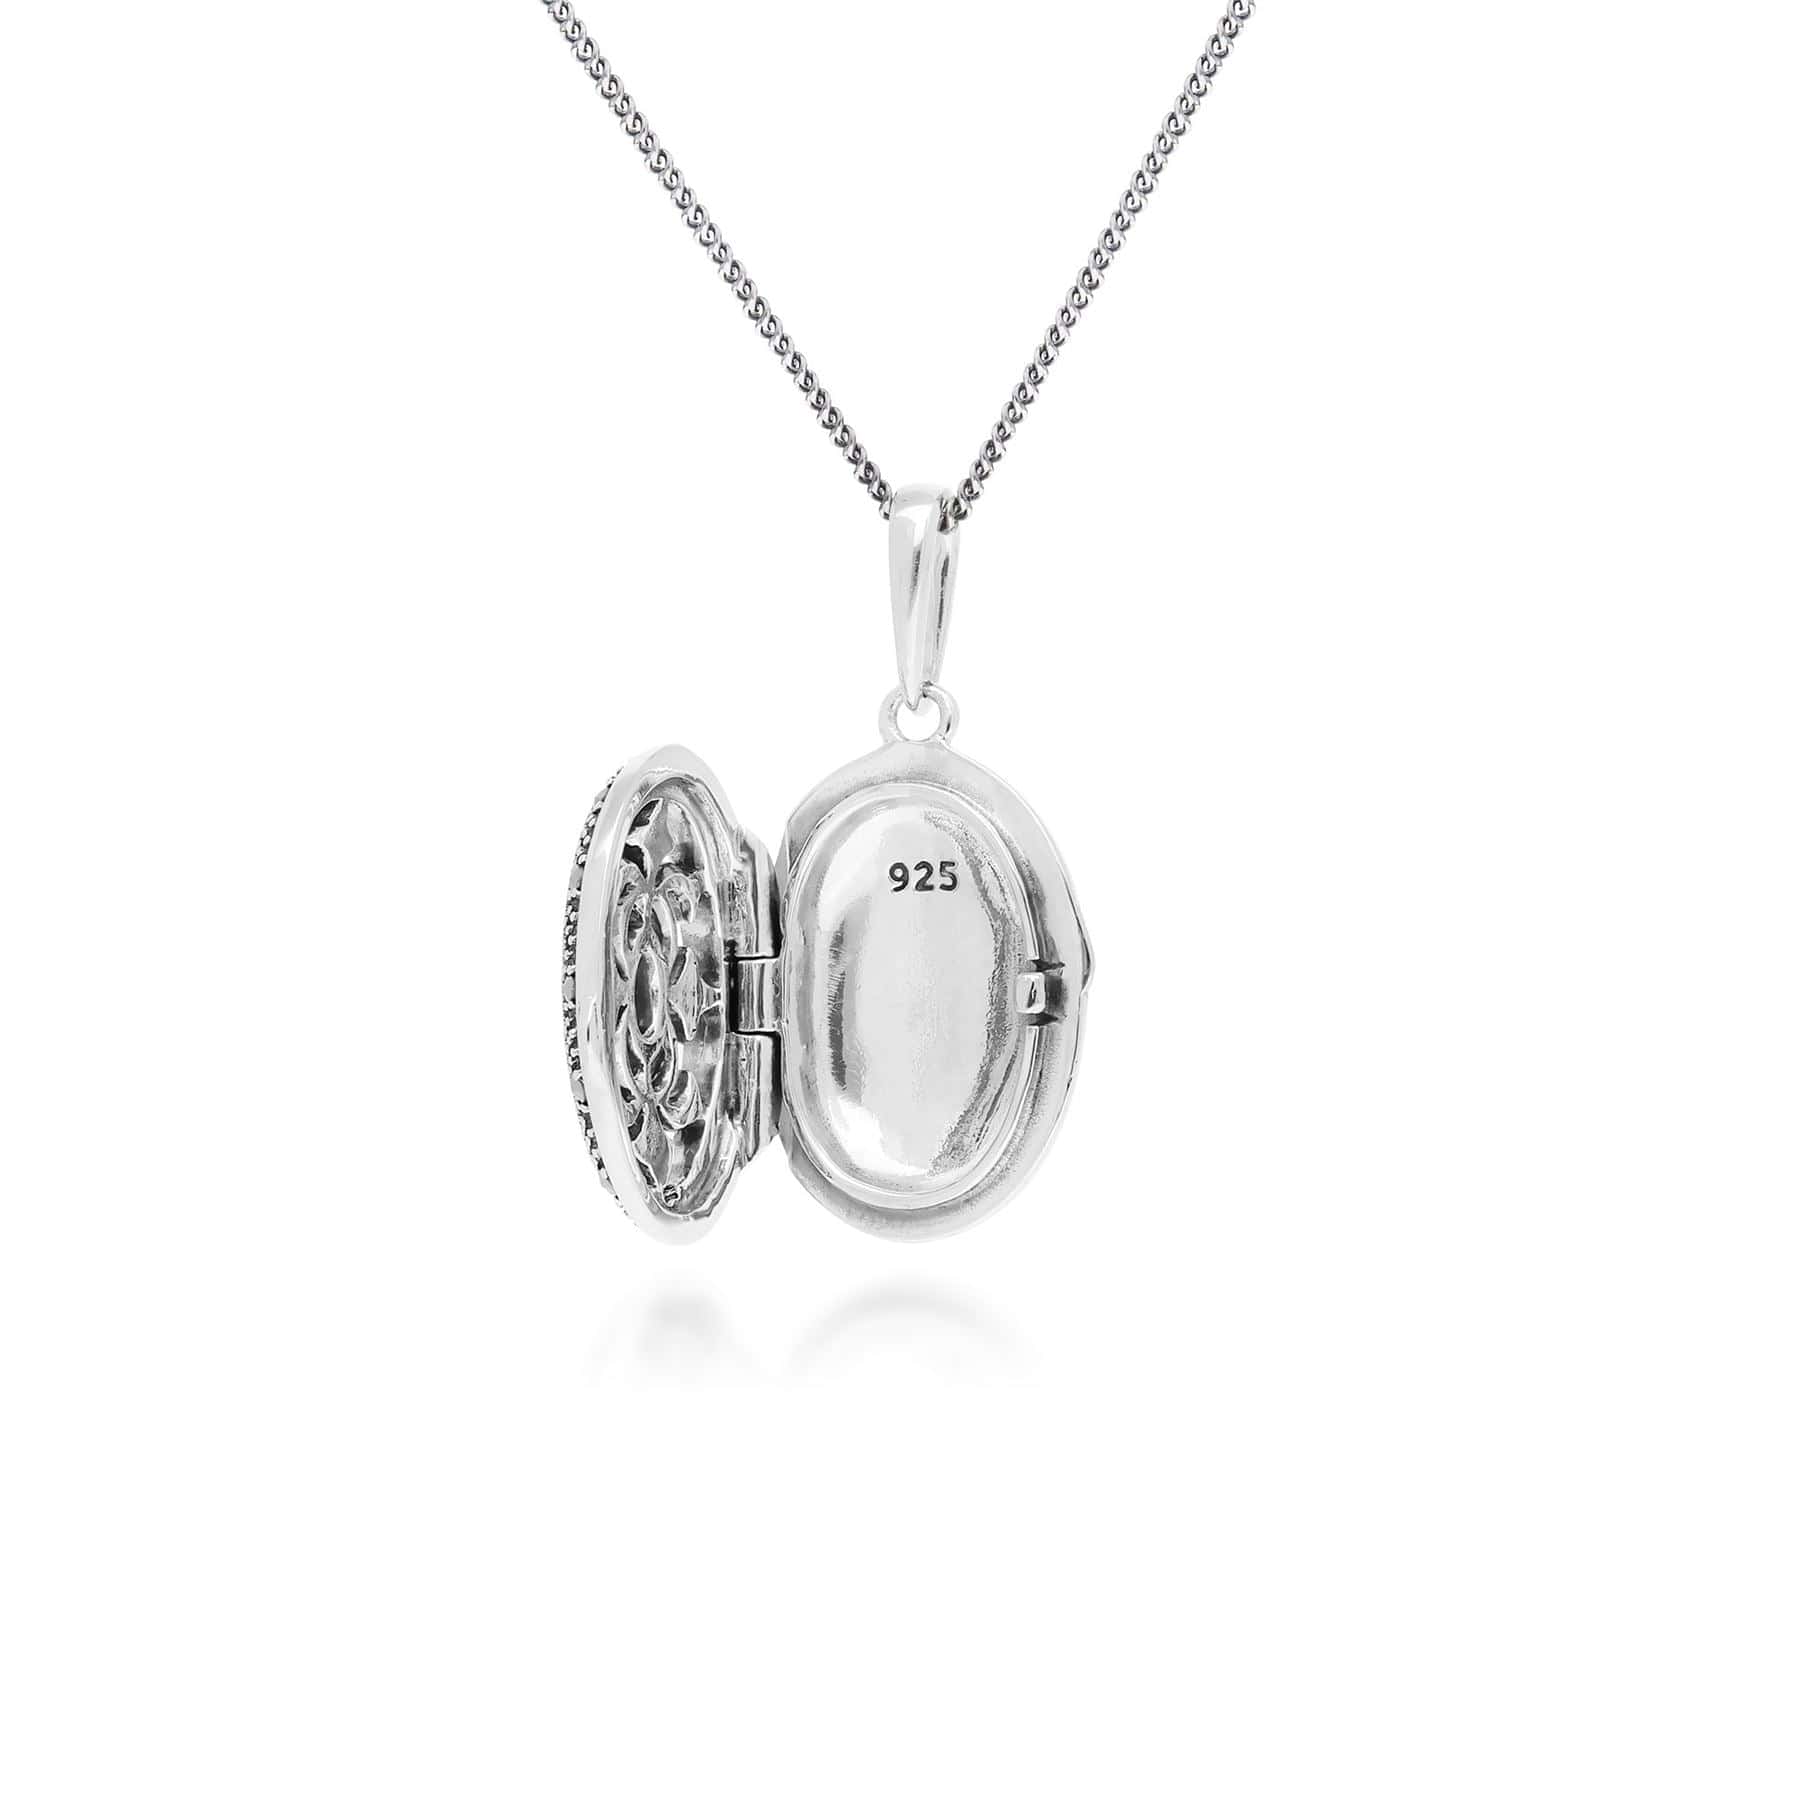 Art Nouveau Style Oval Opal & Marcasite Locket Necklace in 925 Sterling Silver - Gemondo